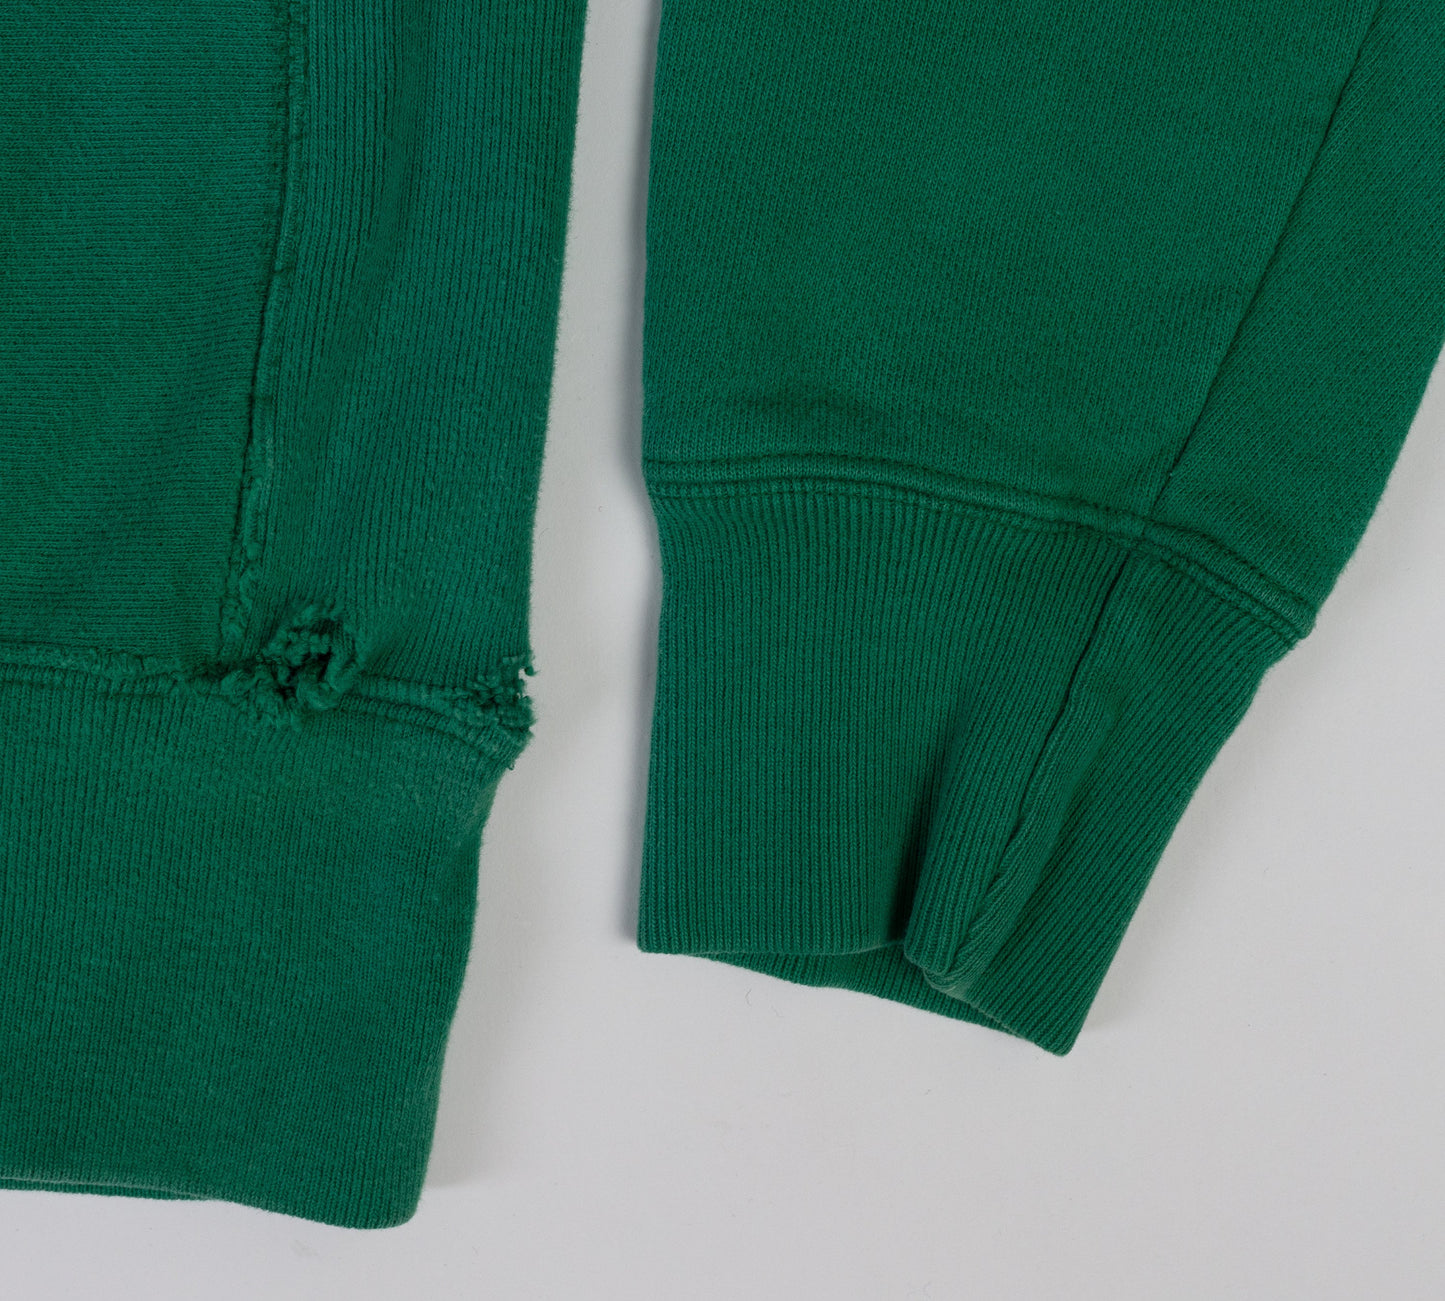 Vintage Champion Reverse Weave Frog Green Sweatshirt - Men's Small 